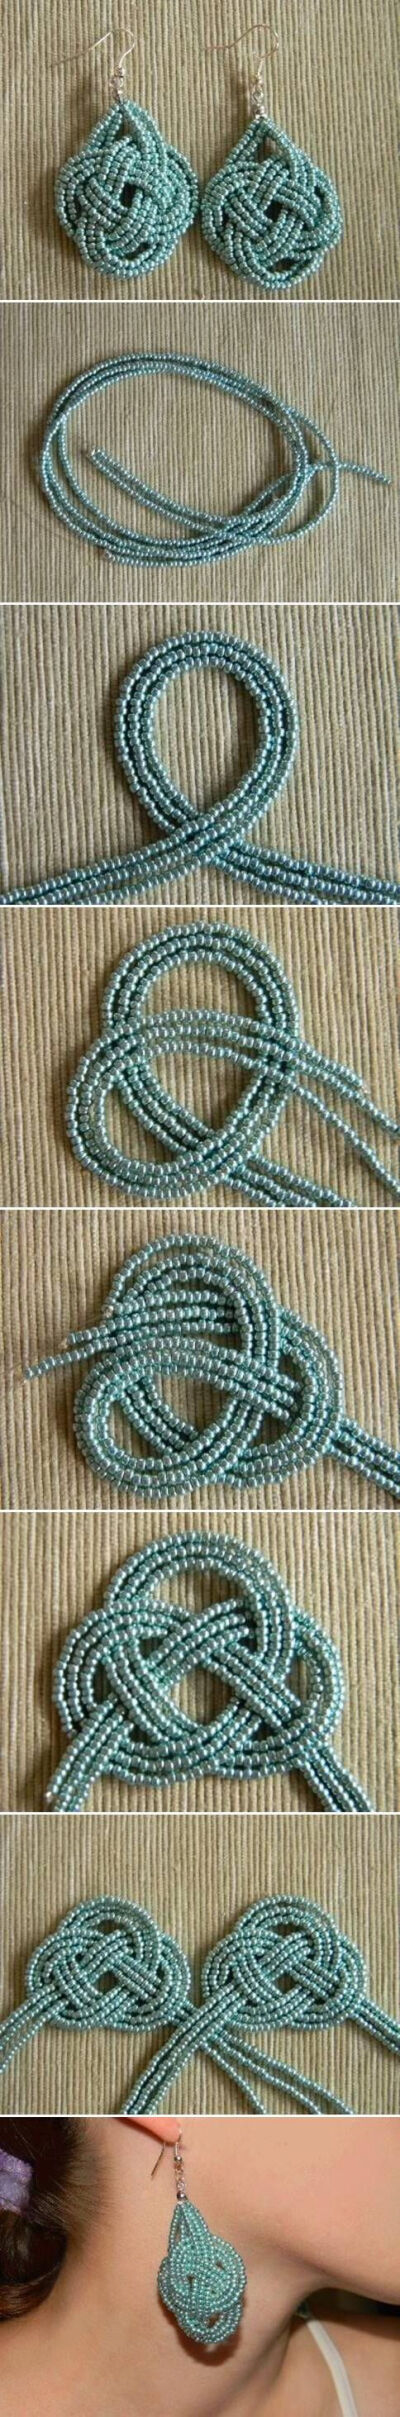 DIY Beads Knot Earrings